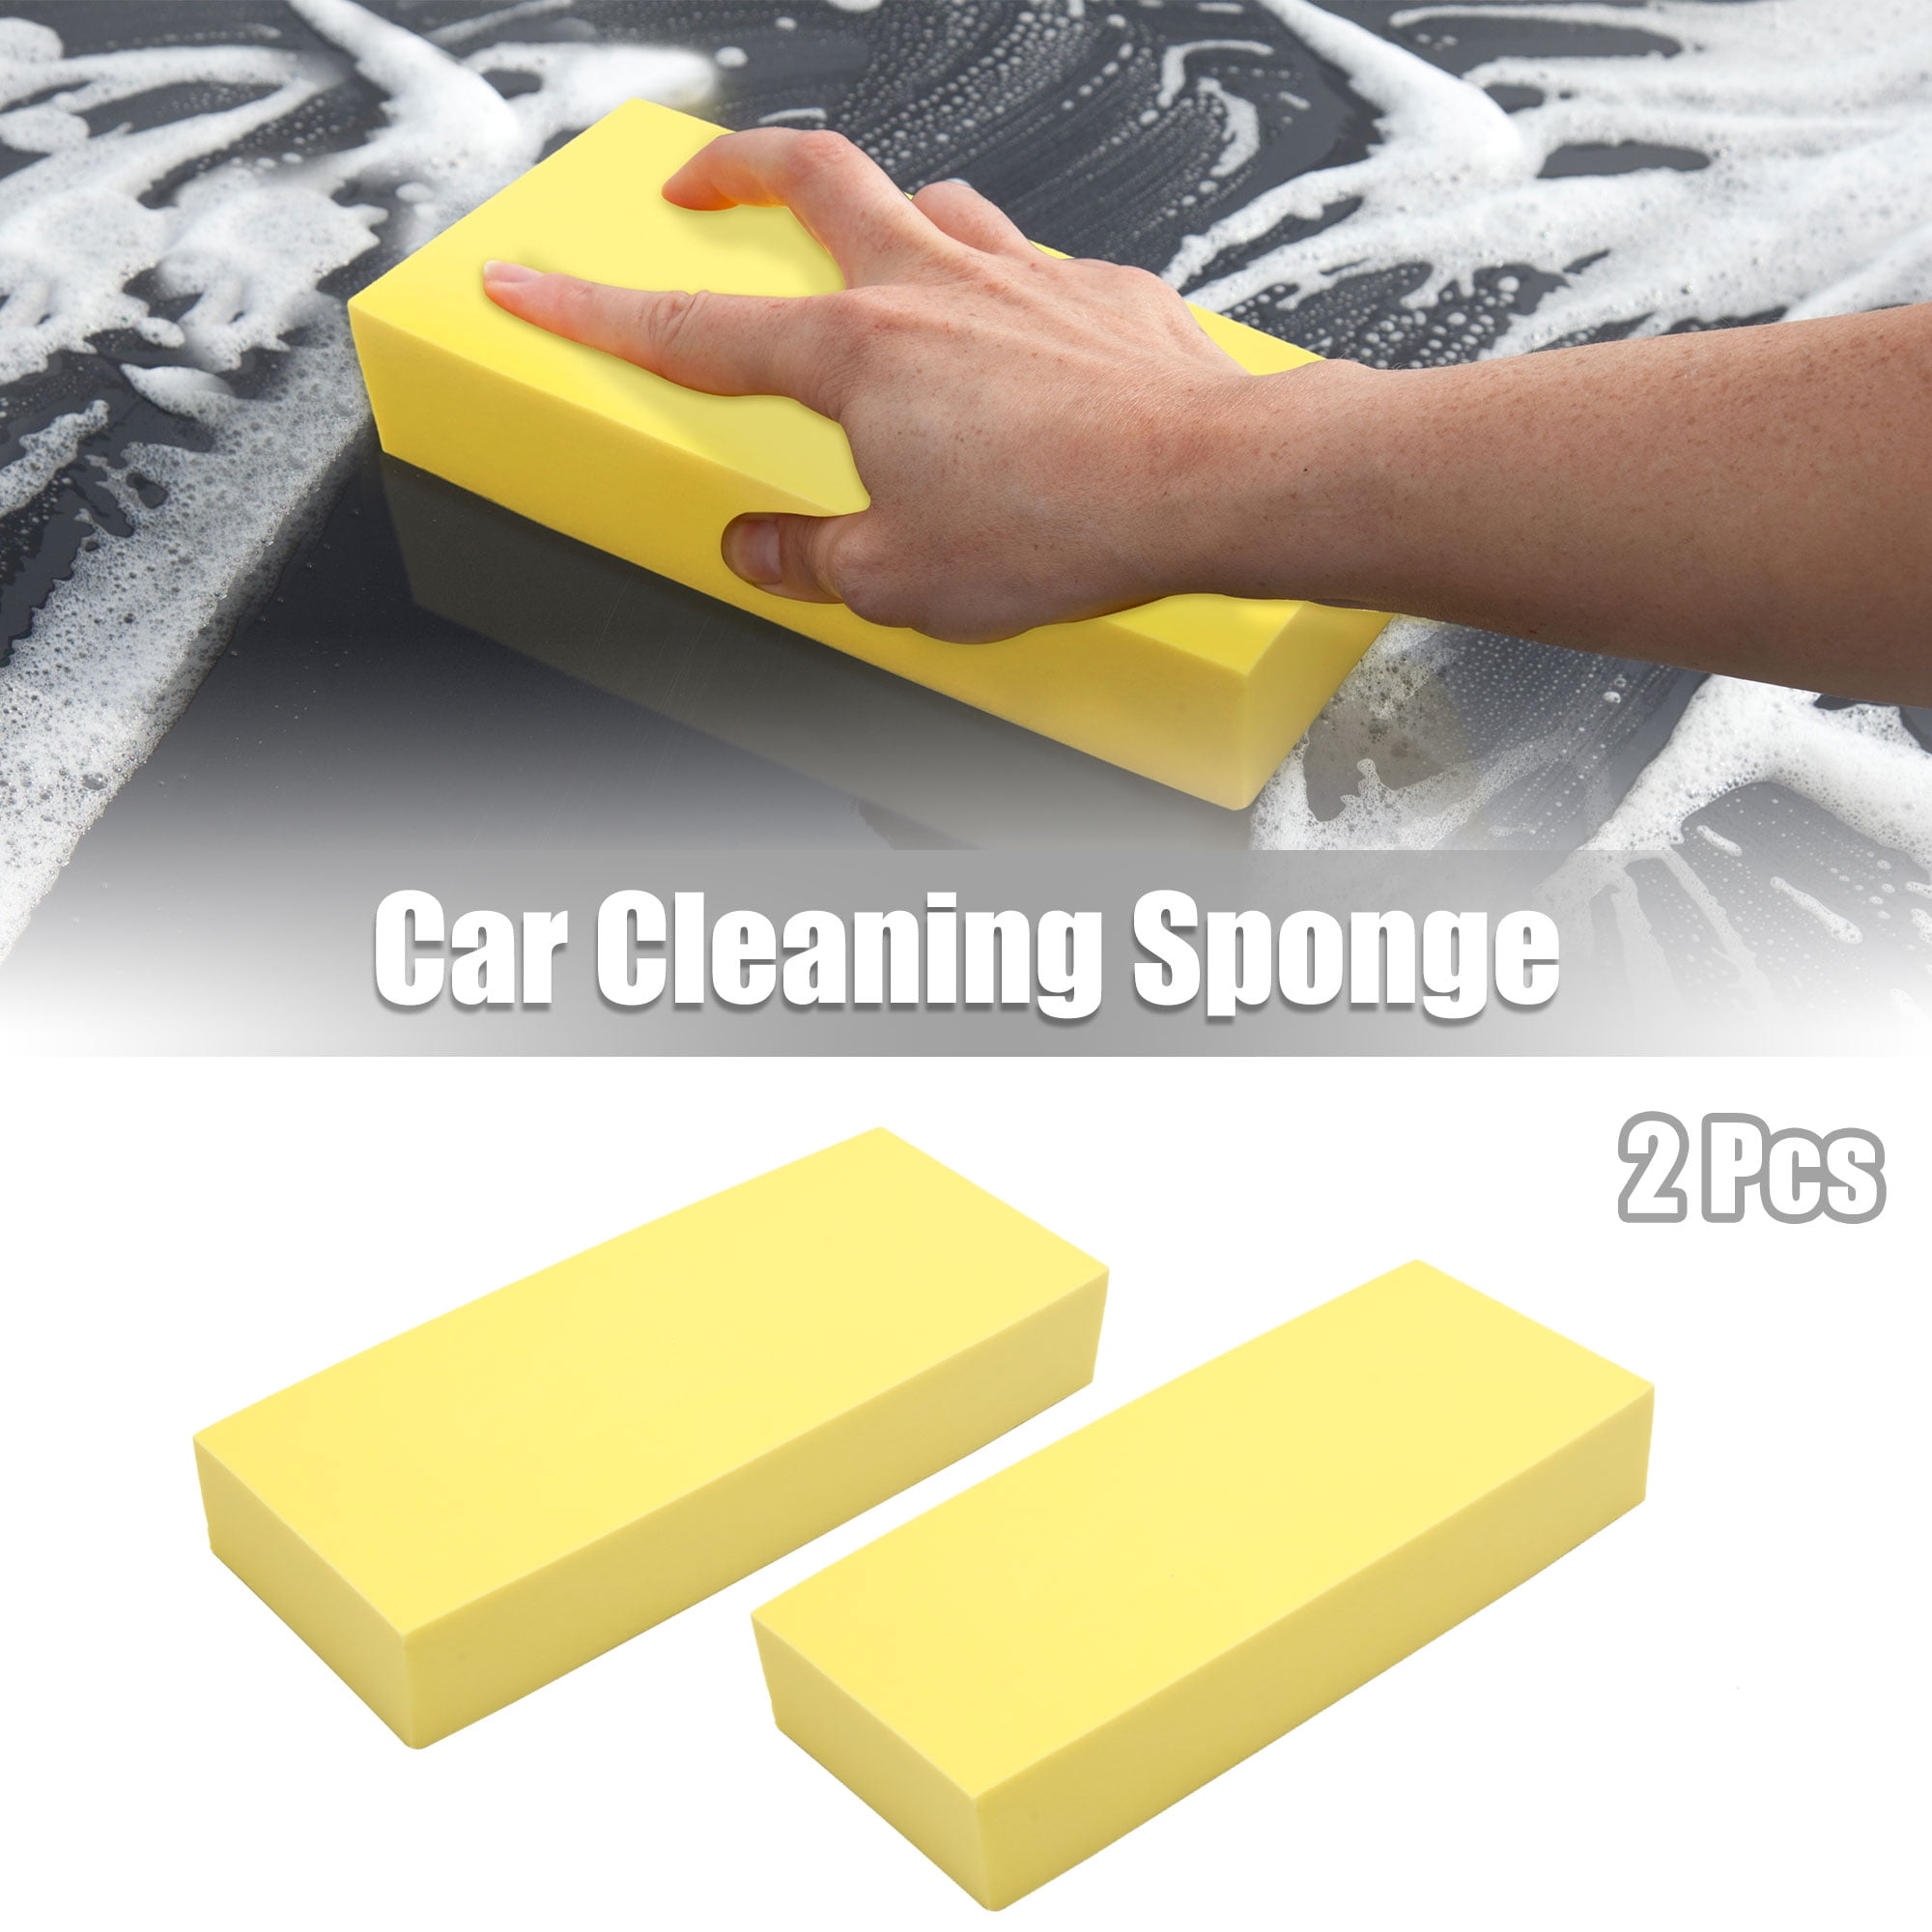 Professional High-Density Foam Car Wash Sponge - Powerful Water Absorption,  Foaming Action, Gentle on Paint - Car Cleaning Sponge Tool Supplies